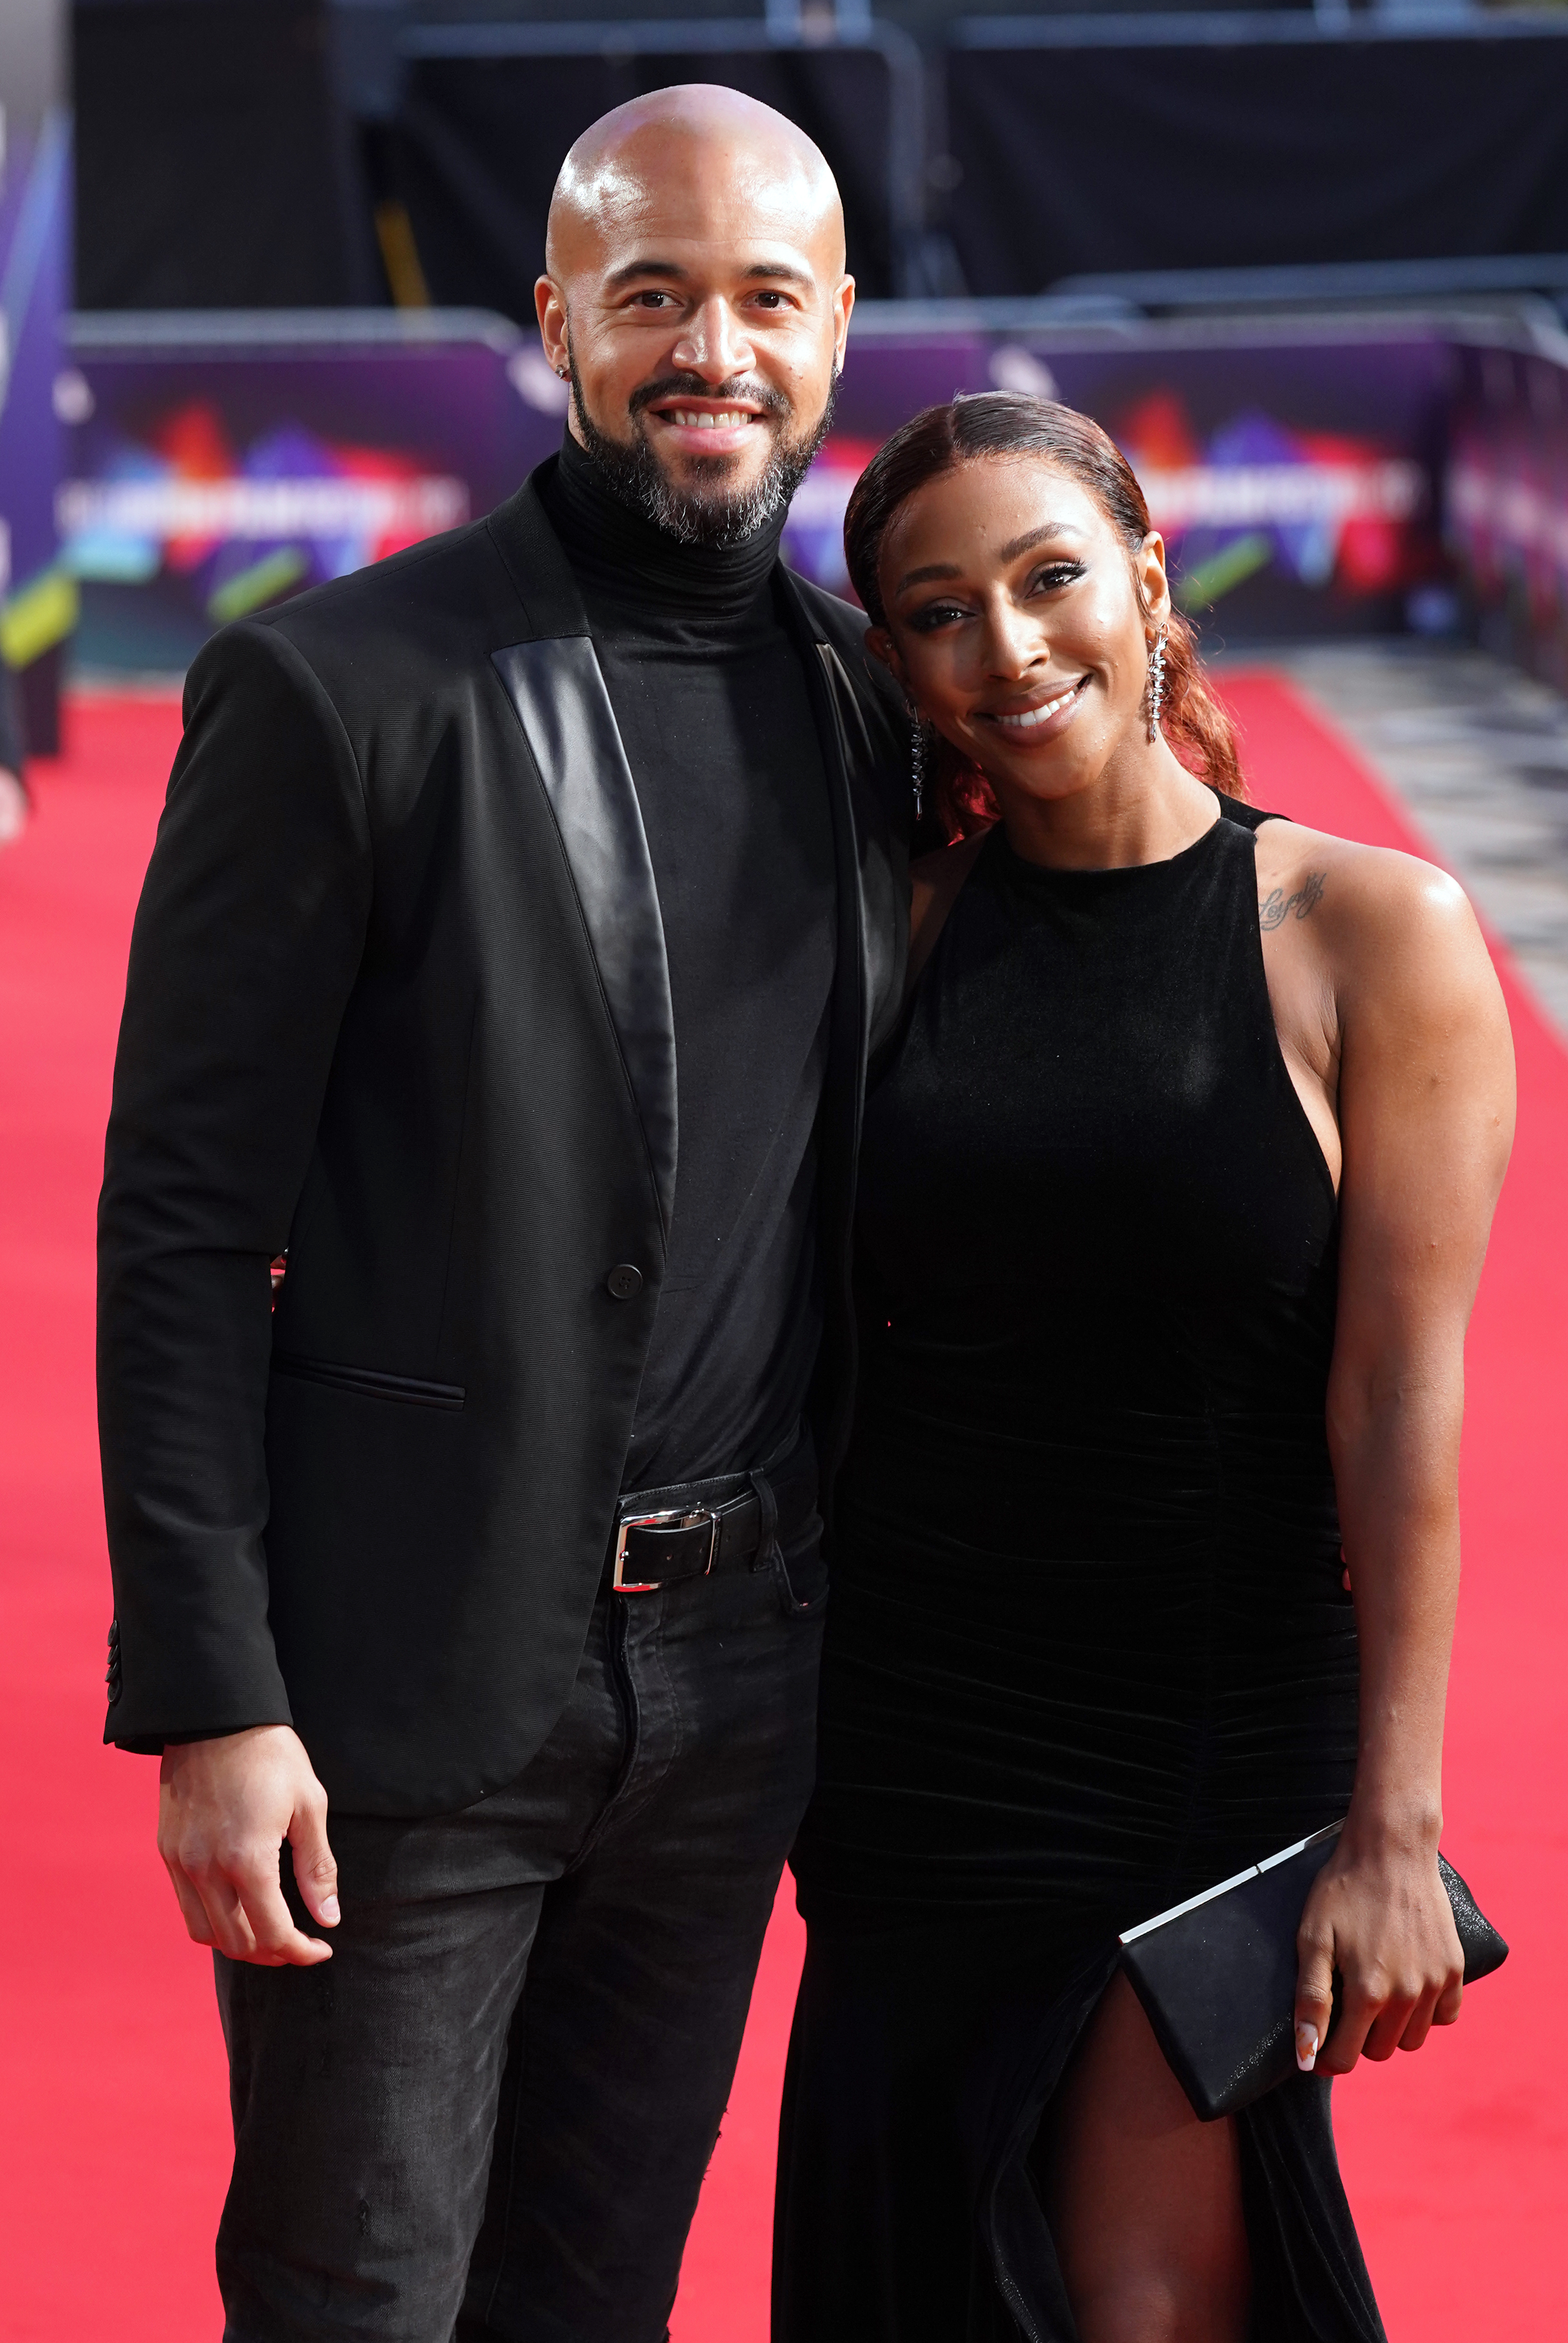 Alexandra Burke and boyfriend Darren Randolph on the red carpet in October 2021